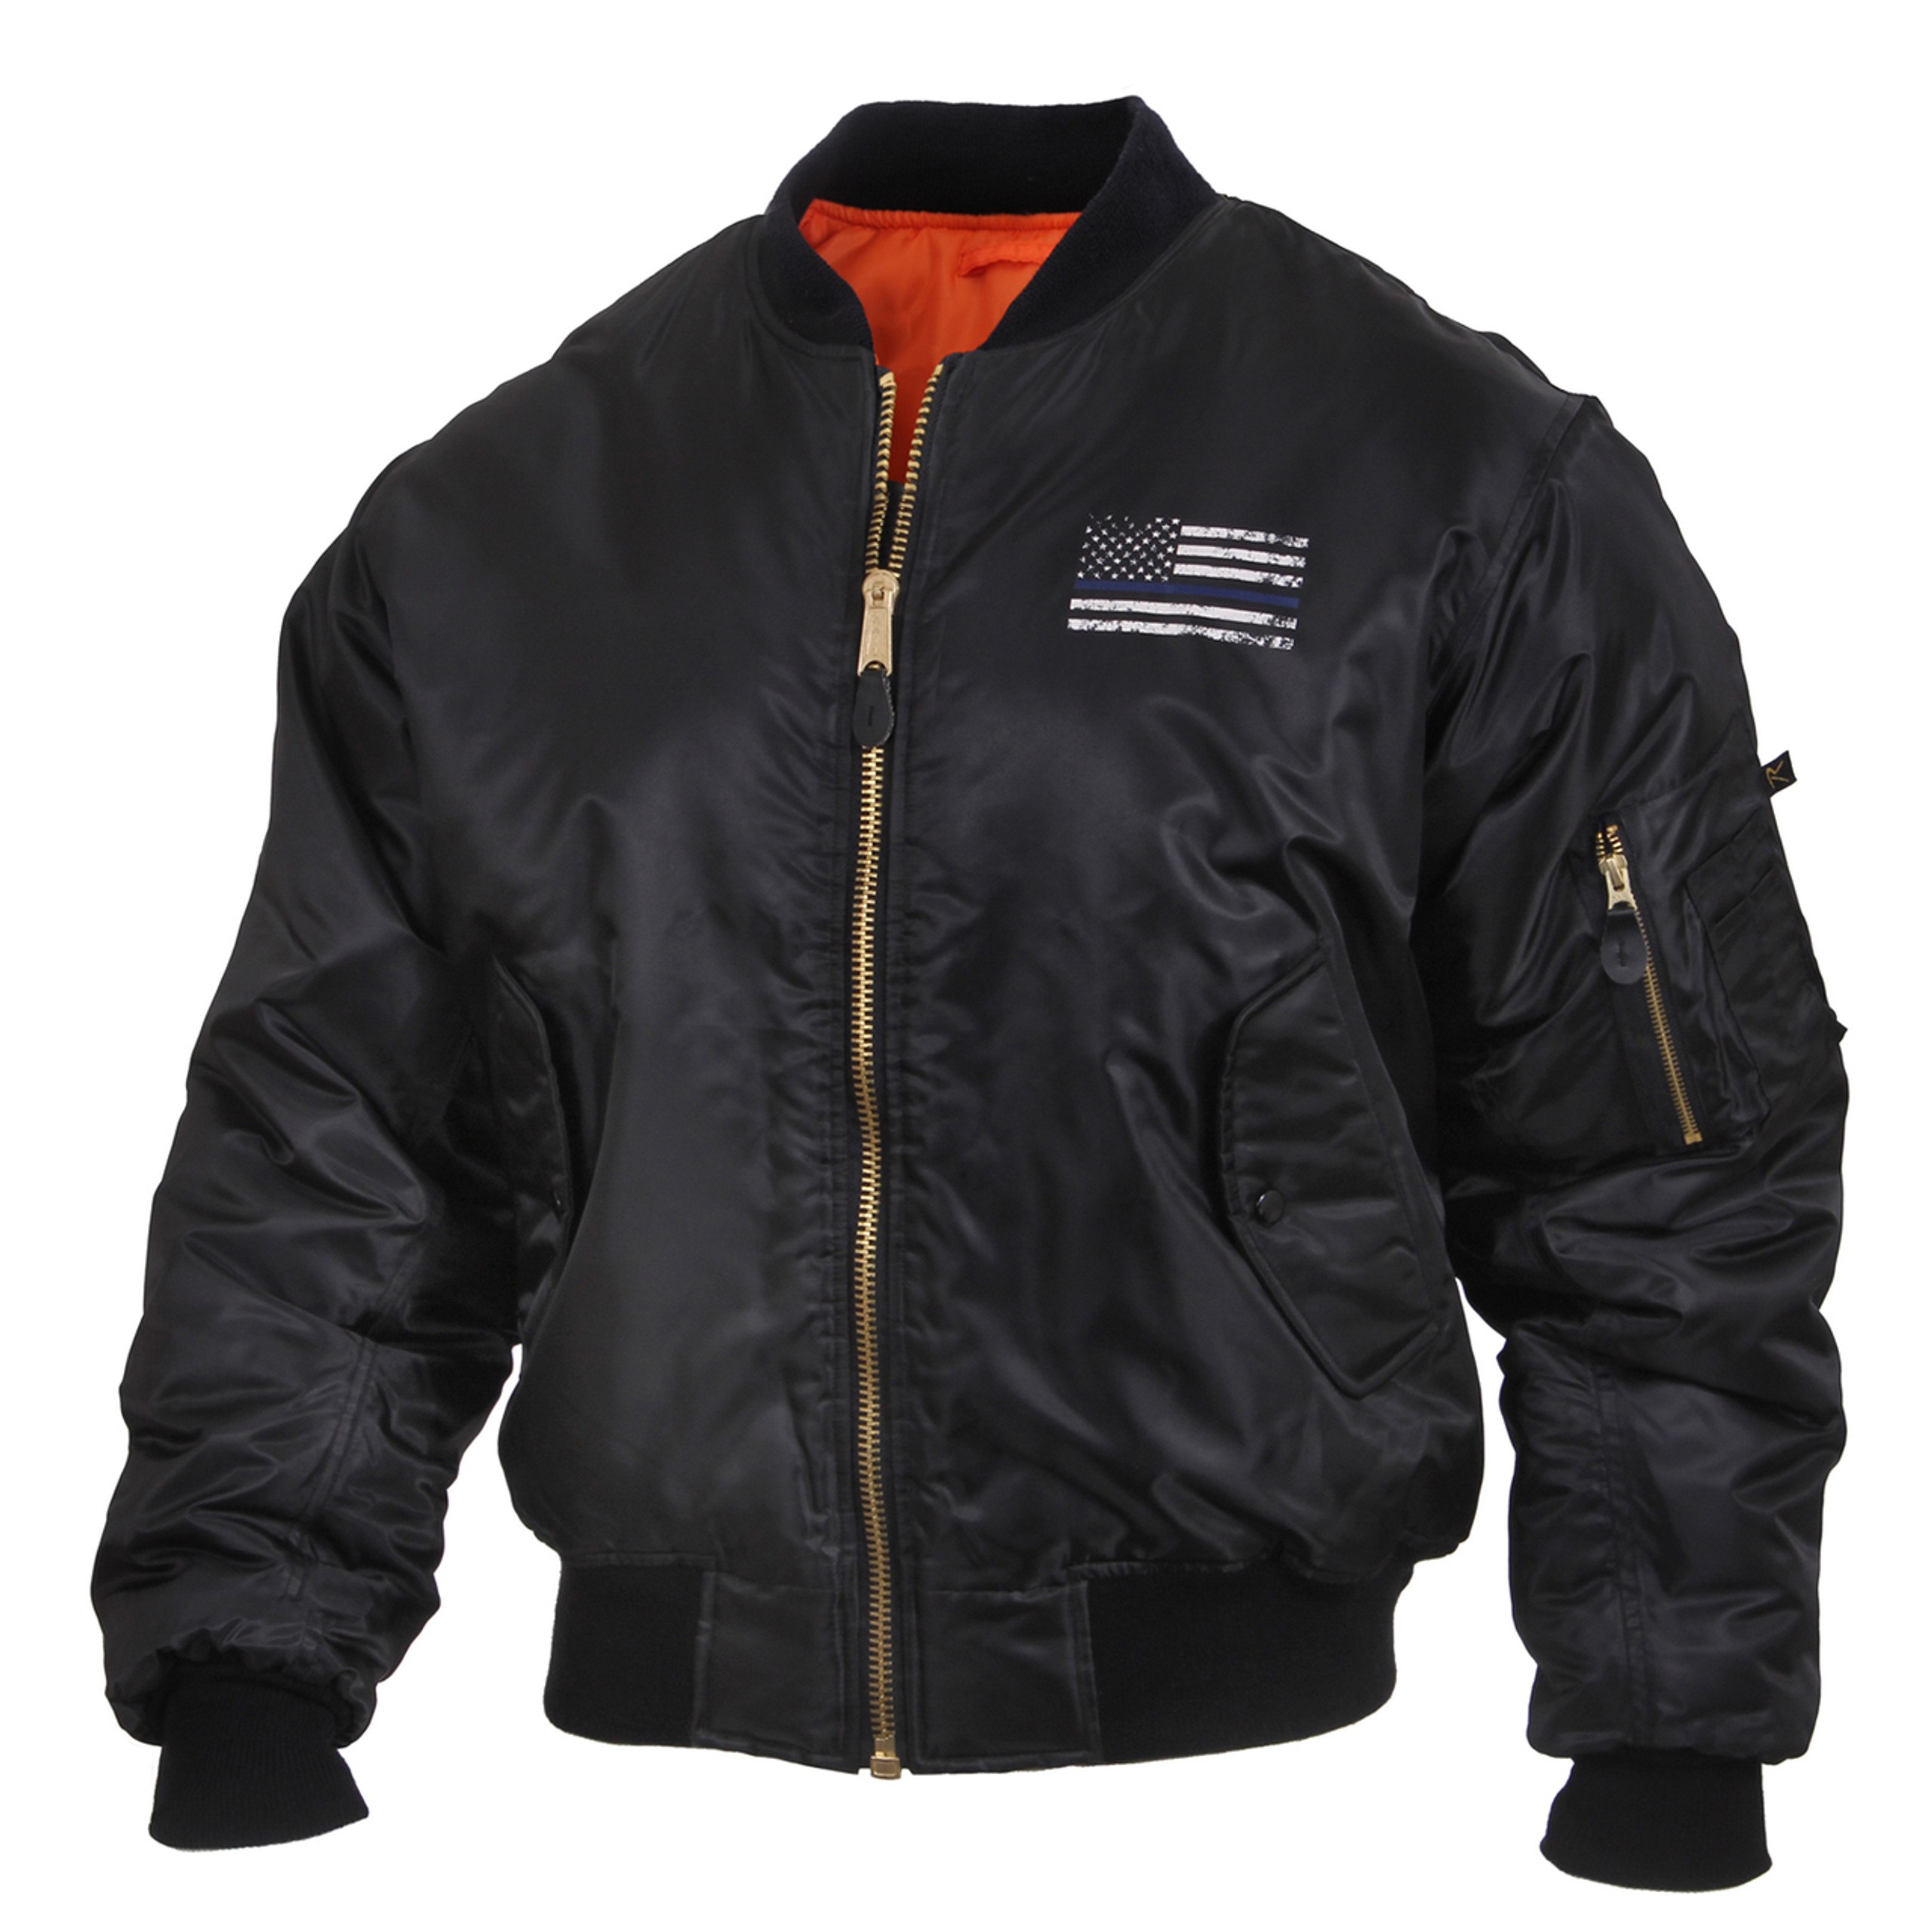 Shop Rothco Military Flight Jackets - Fatigues Army Navy Gear